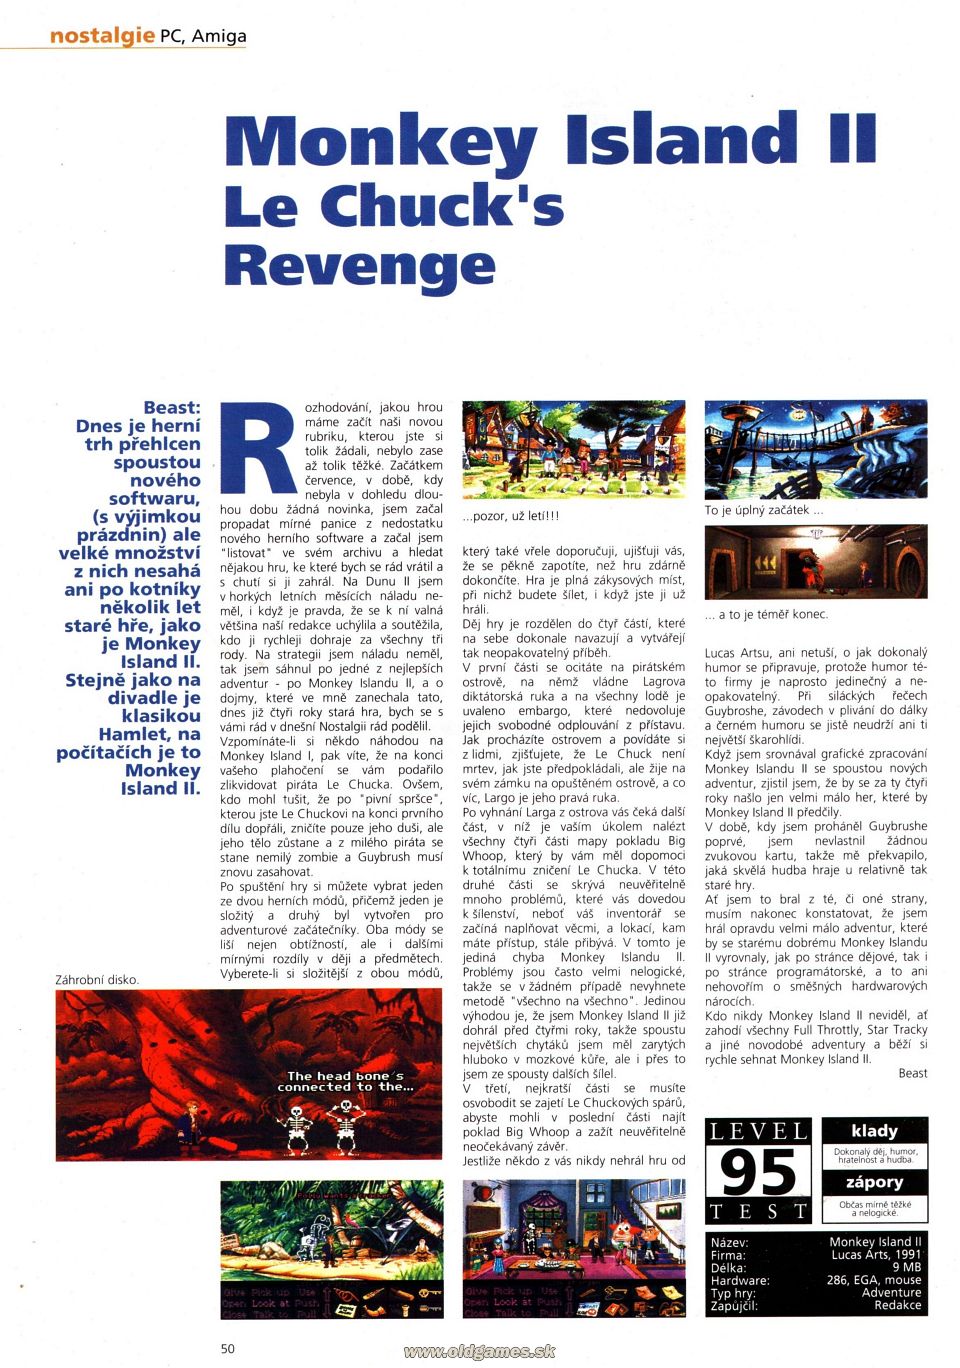 Nostalgie: Monkey Island II: Le Chuck's Revenge